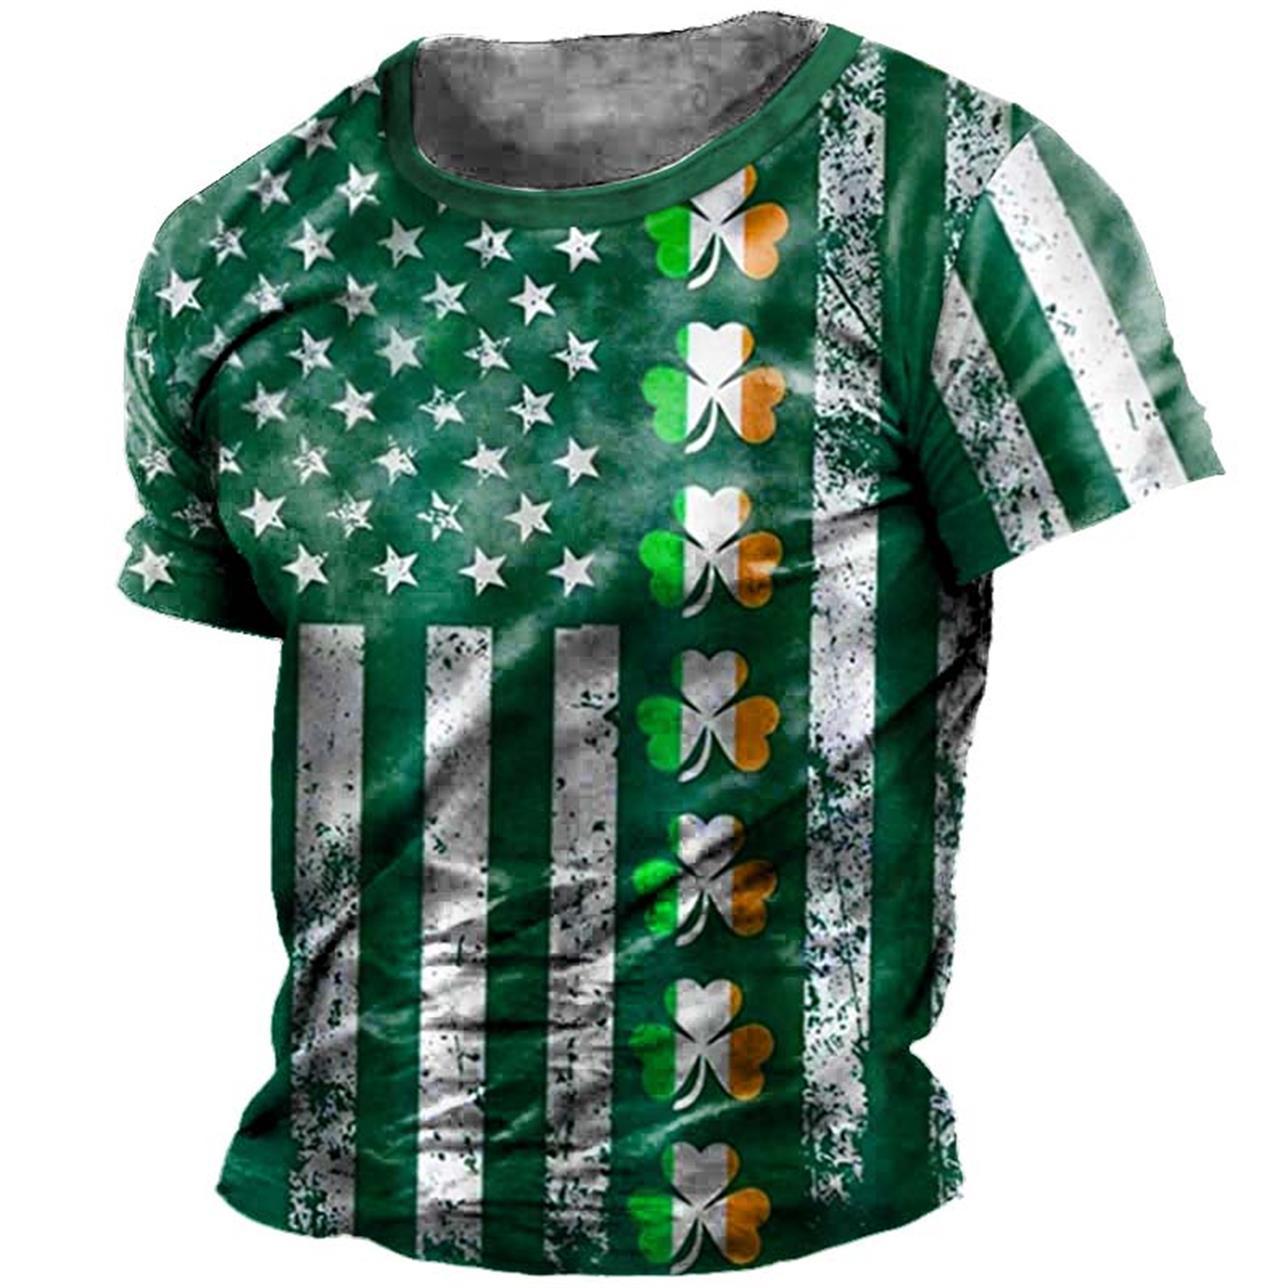 Men's St. Patrick's Day Chic American Flag Print T-shirt